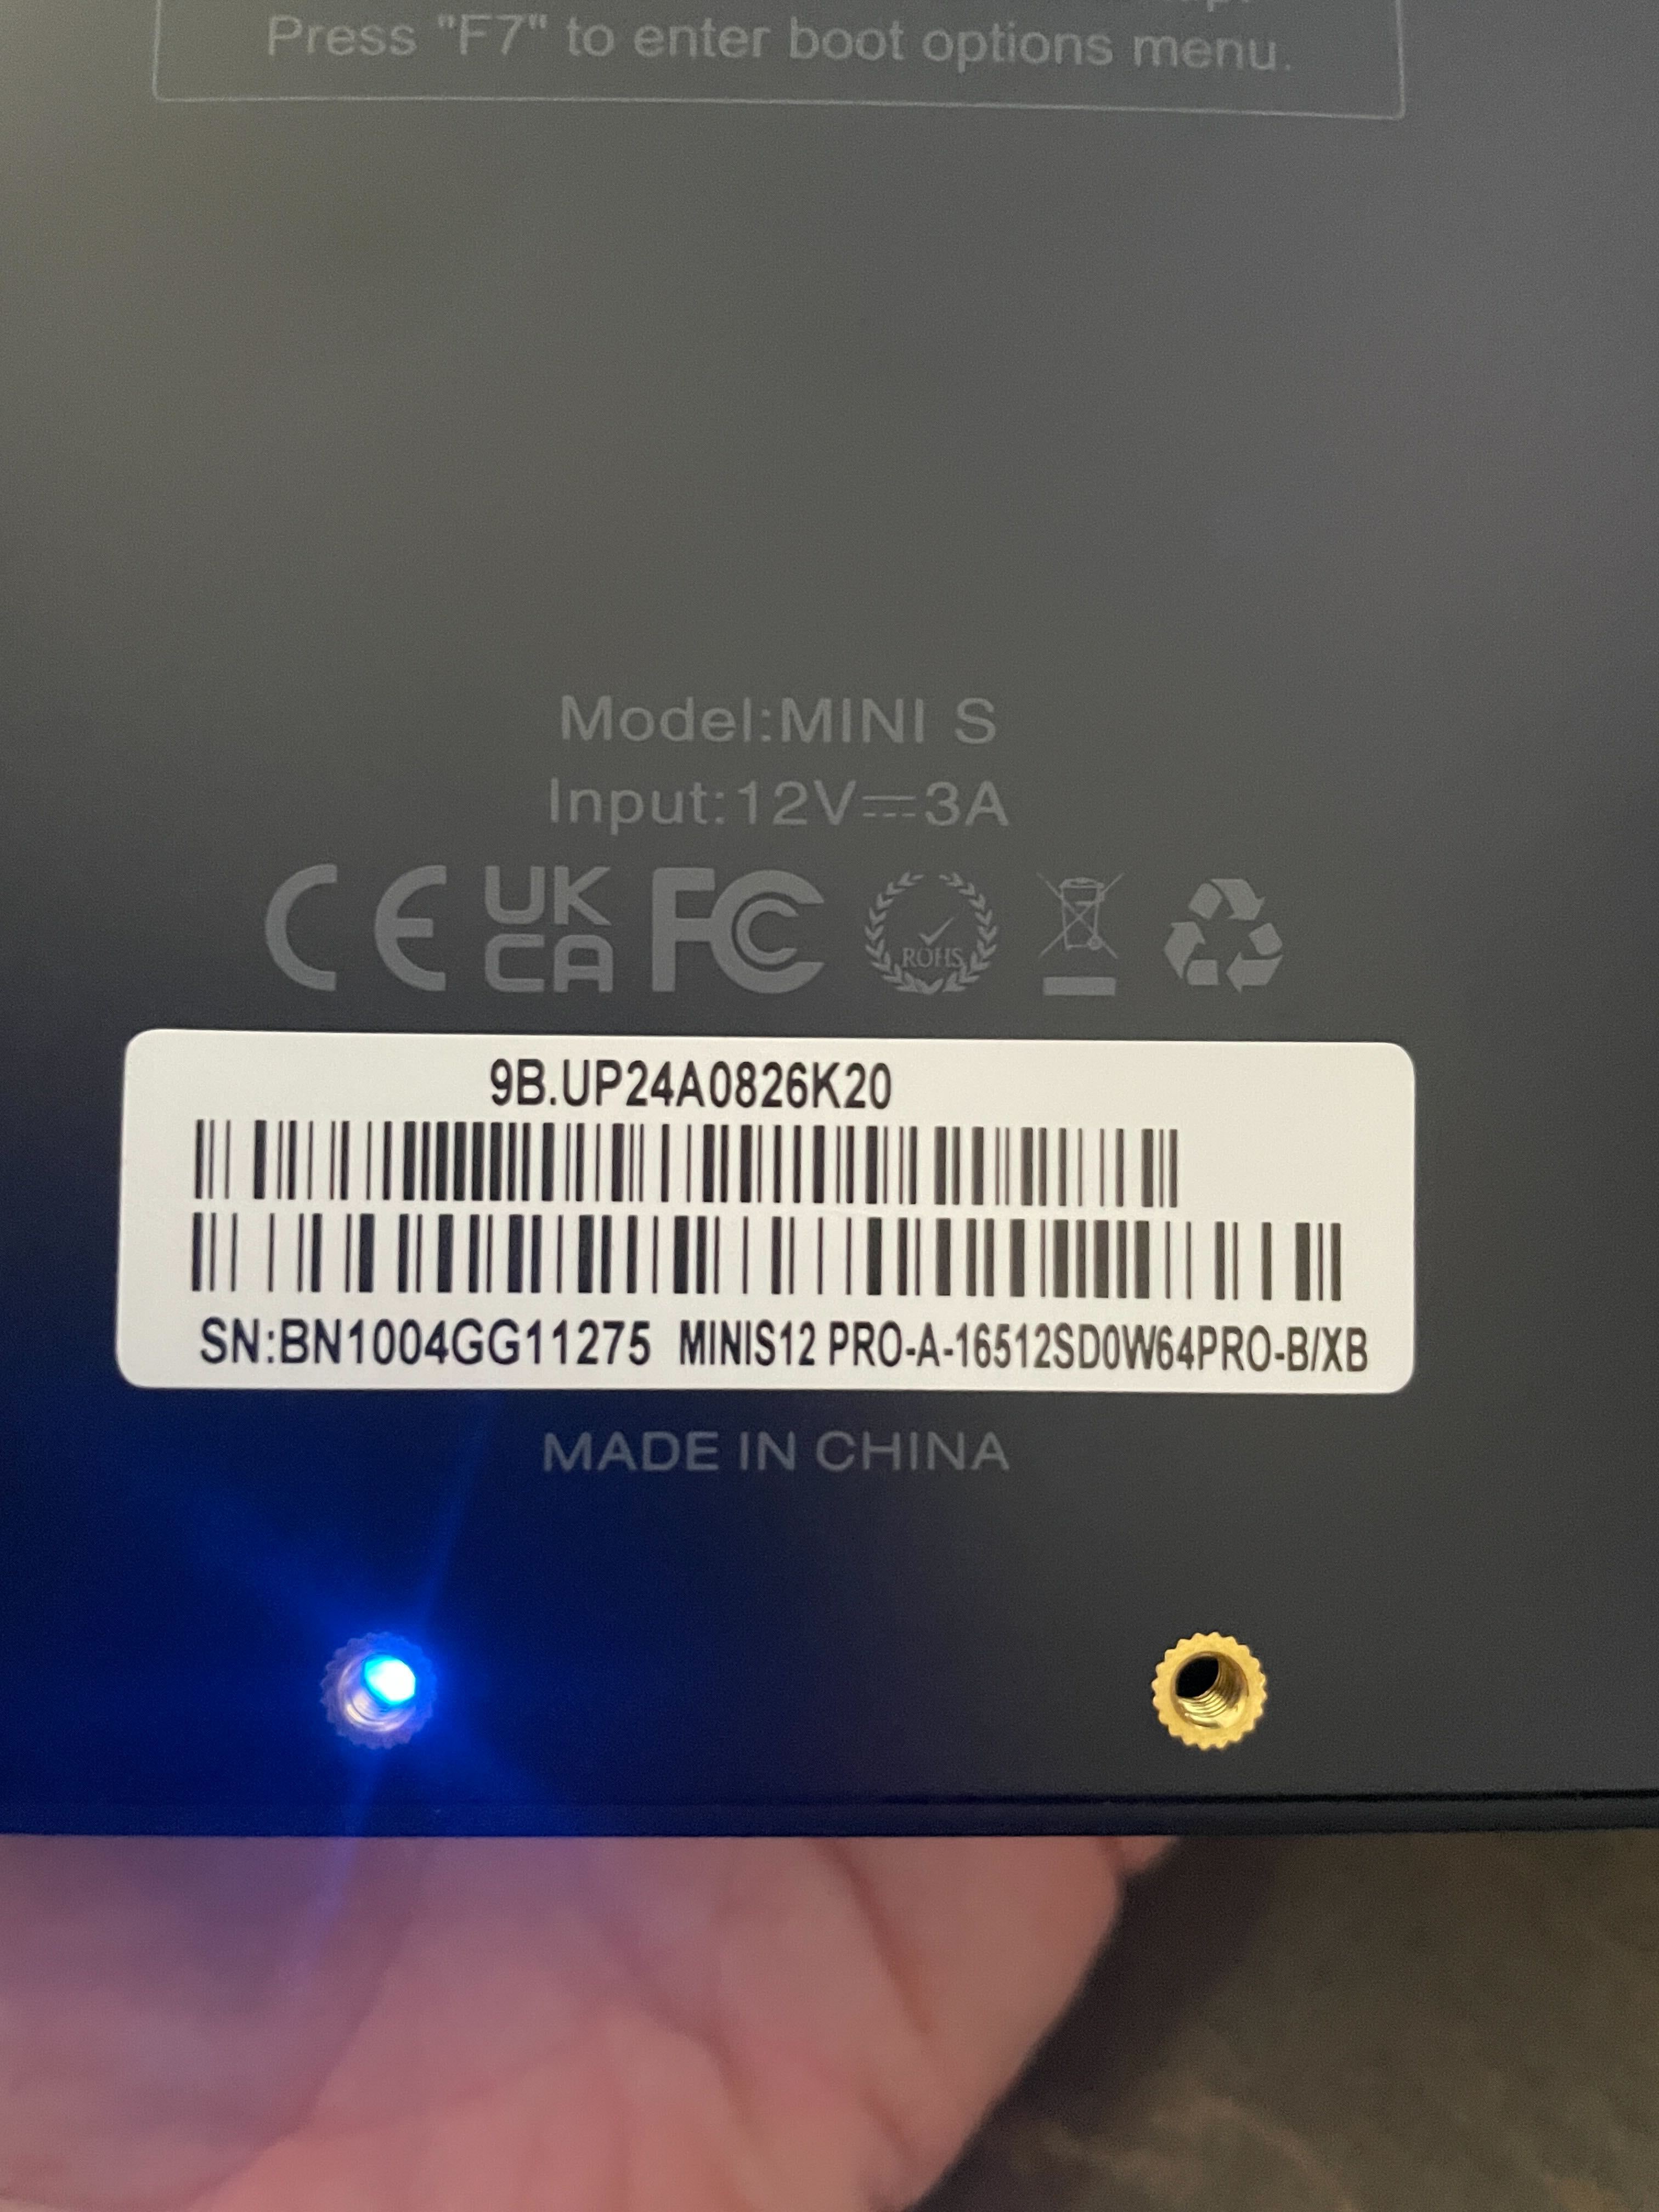 Mini S 12 Pro Need Windows install image and license